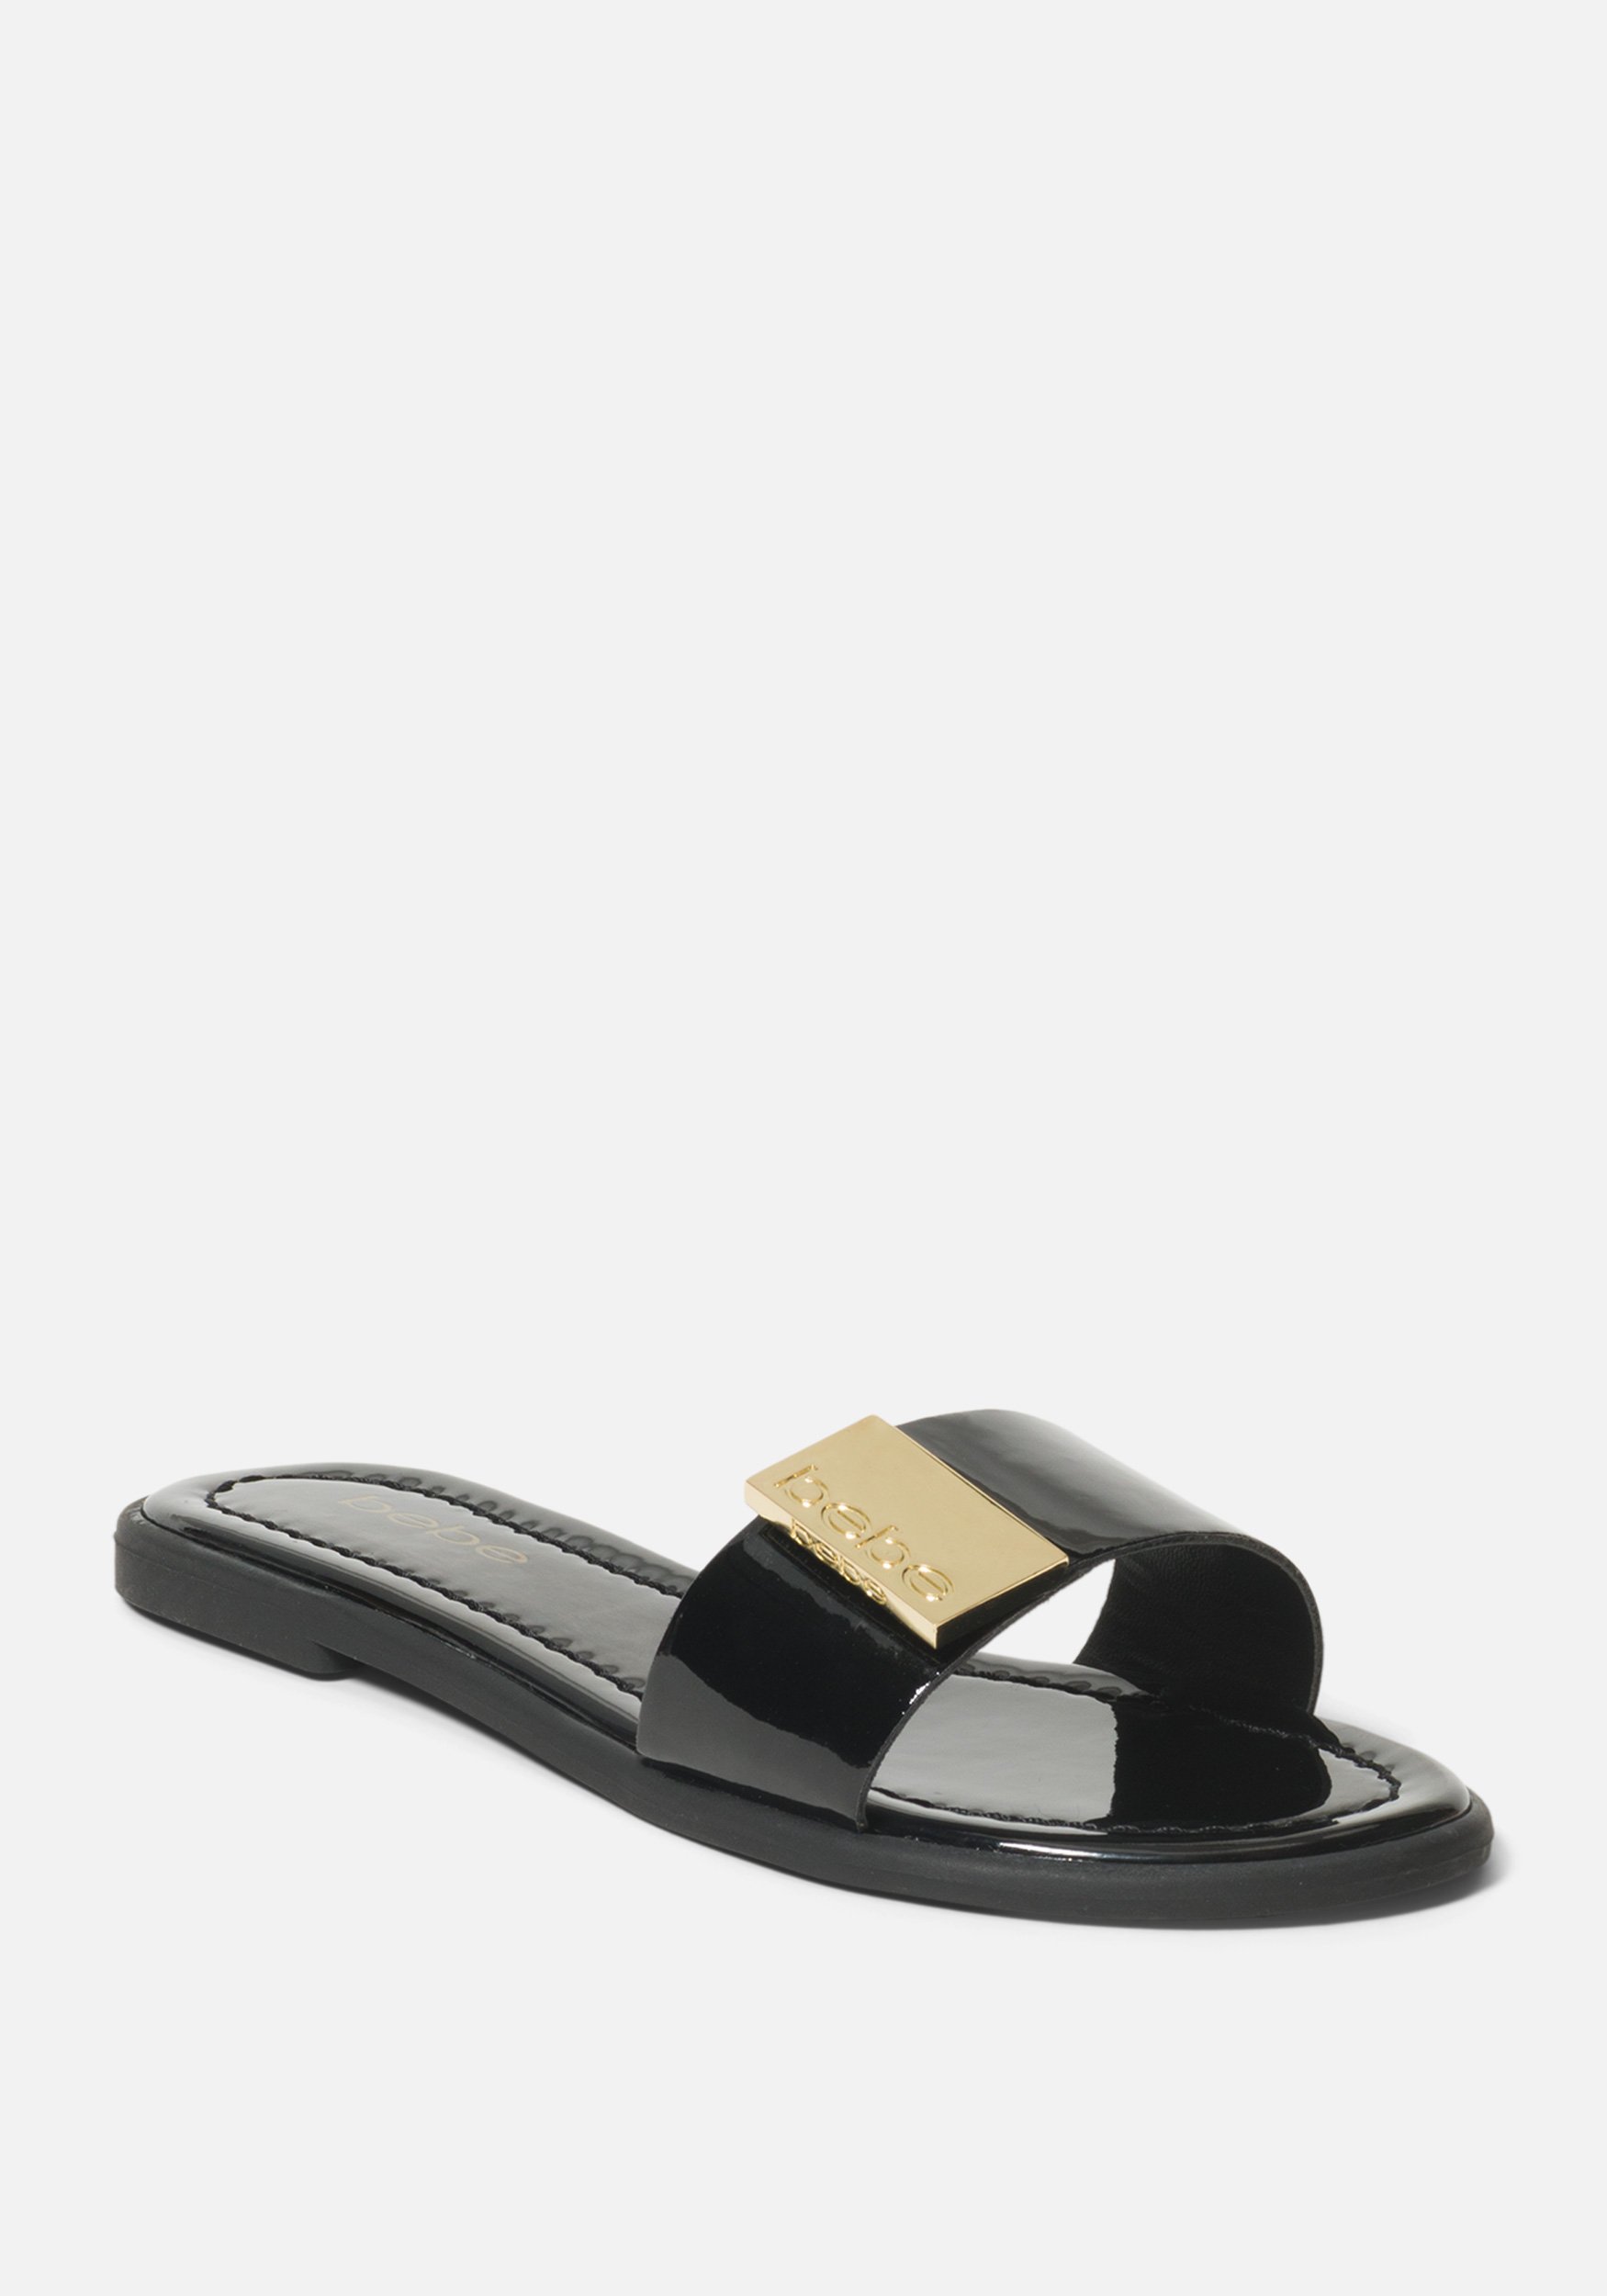 Bebe Women's Lania Slides Shoe, Size 8.5 in Black Synthetic